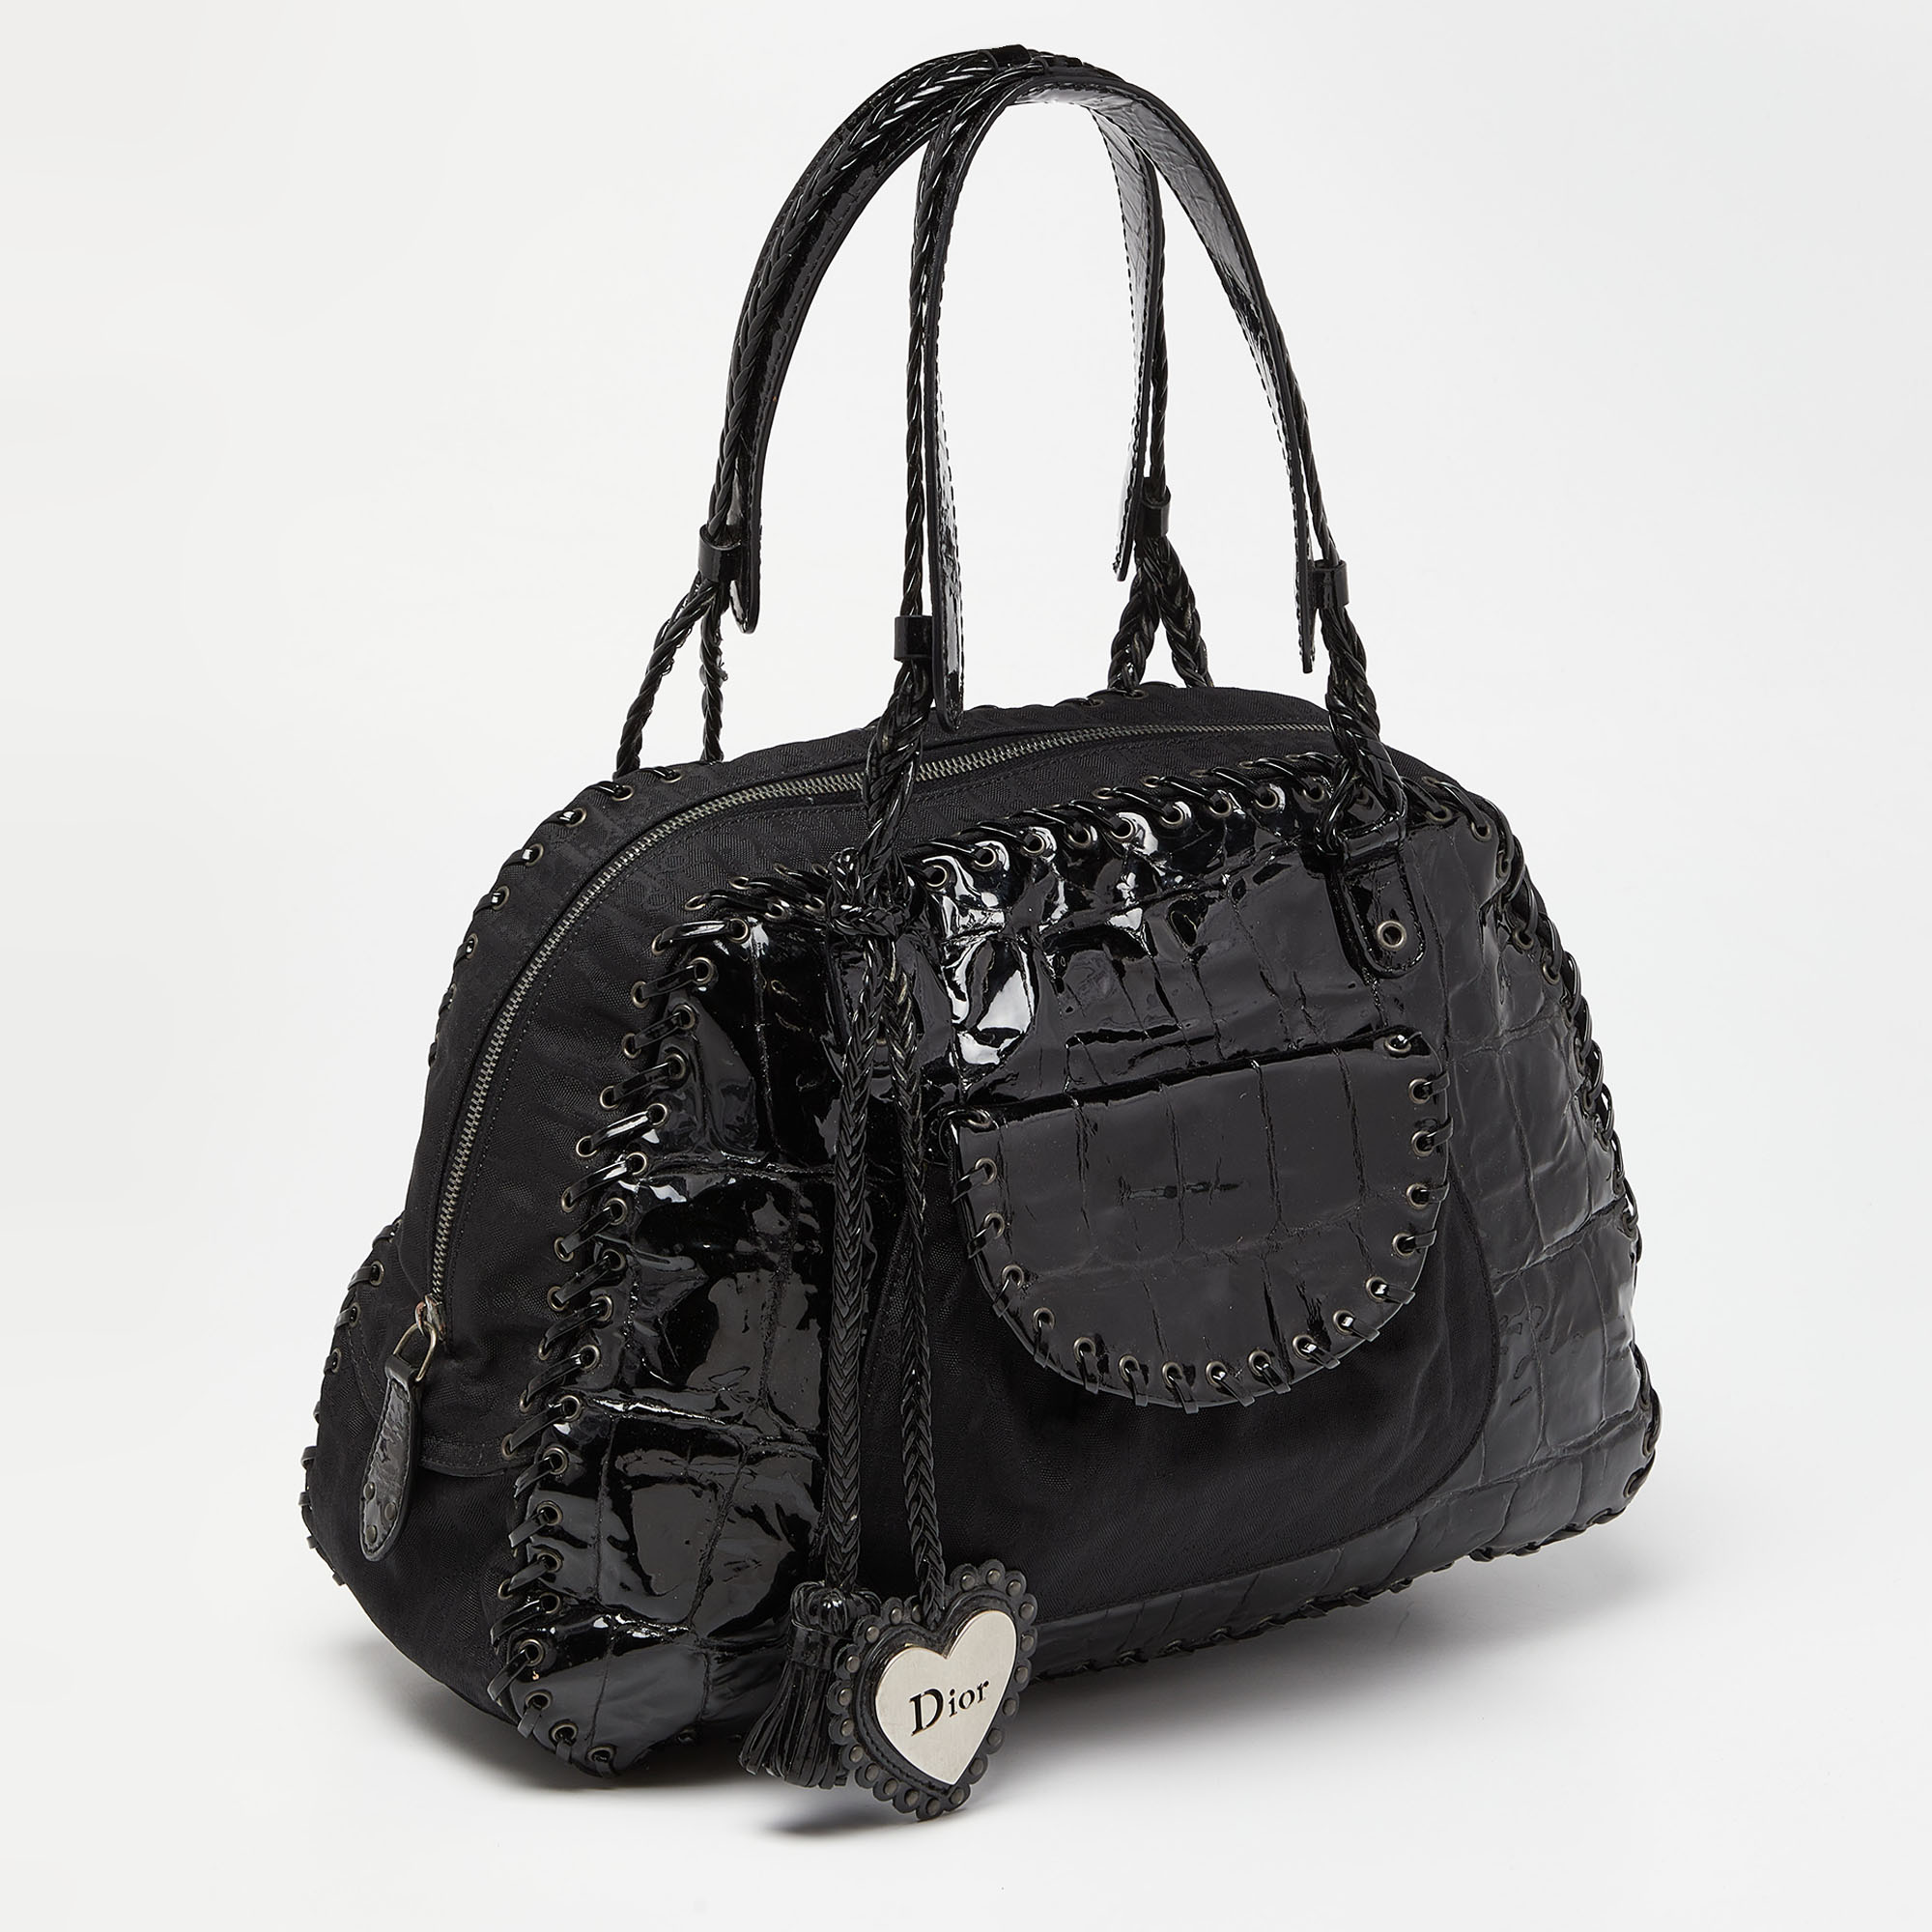 Dior Black Oblique Nylon And Croc Patent Leather Ethnic Braided Bag